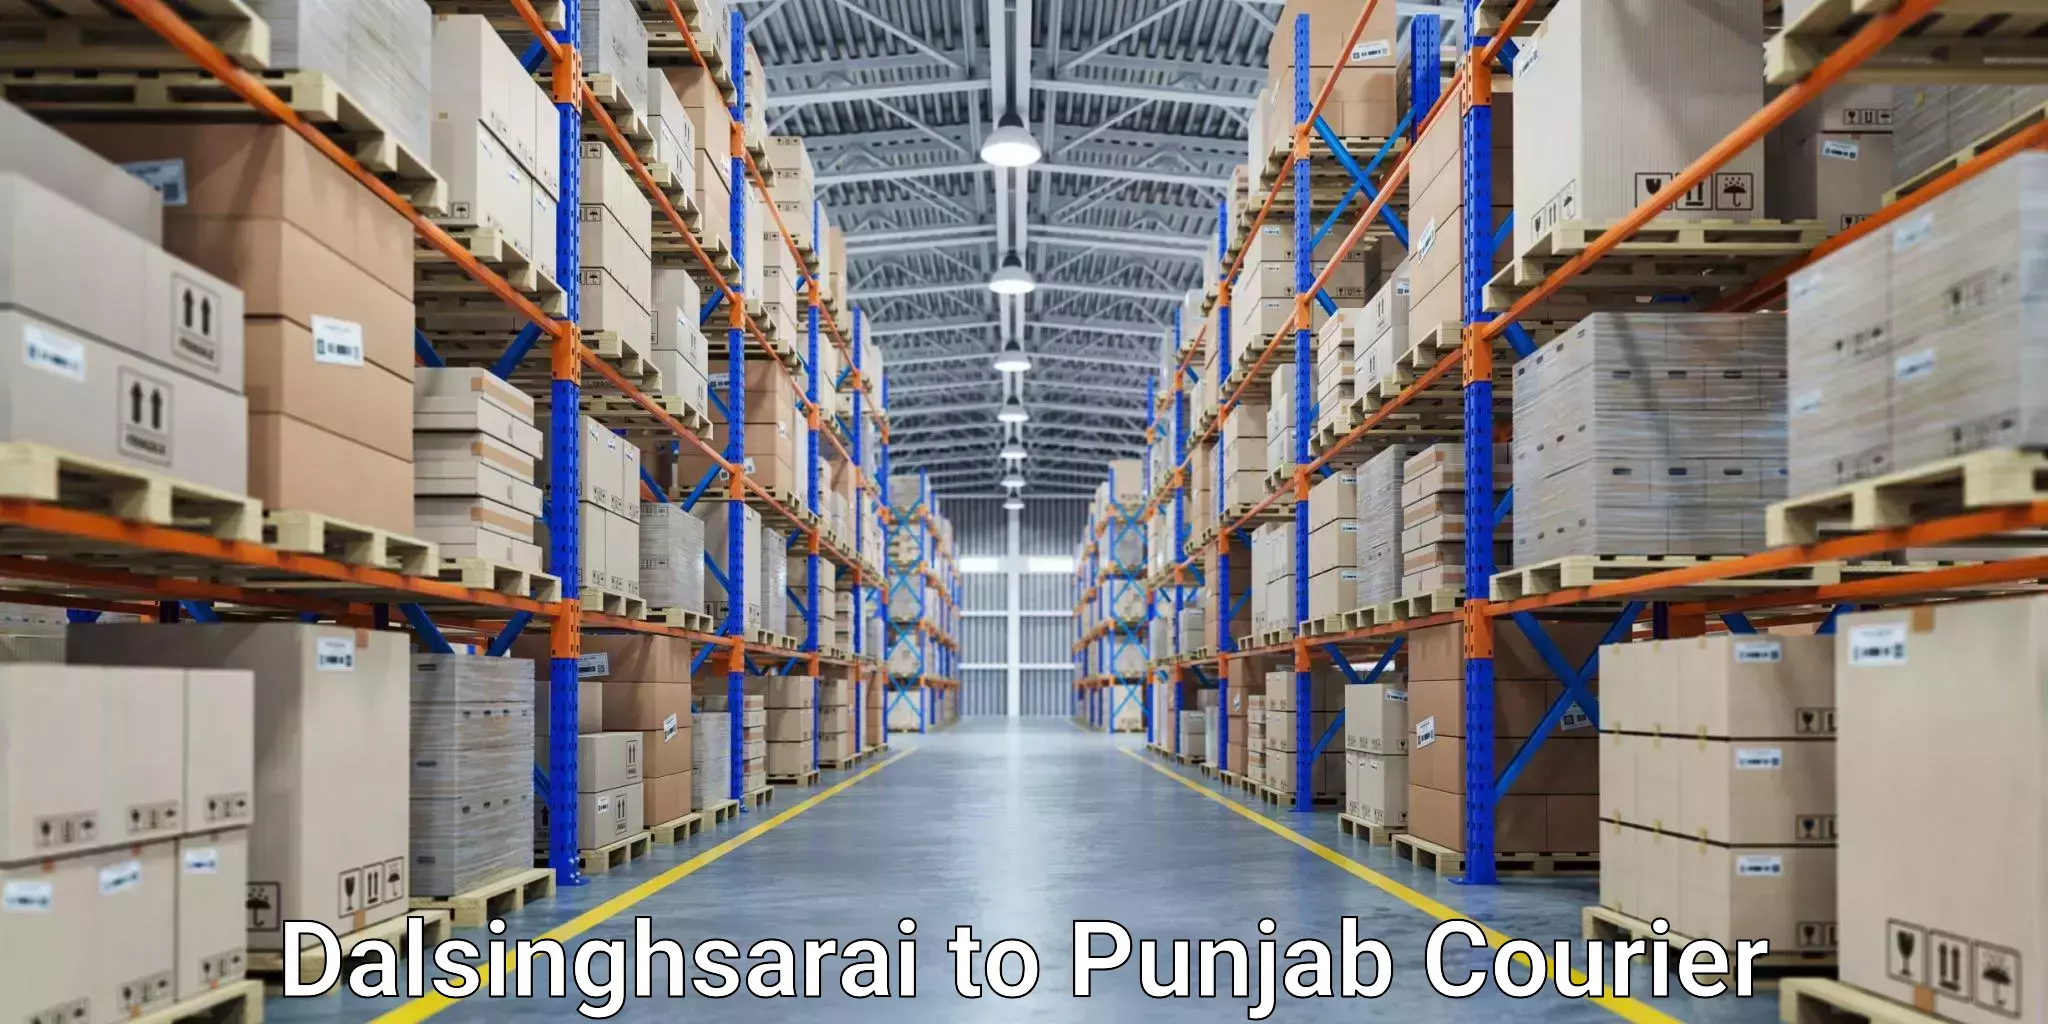 Business shipping needs Dalsinghsarai to Faridkot